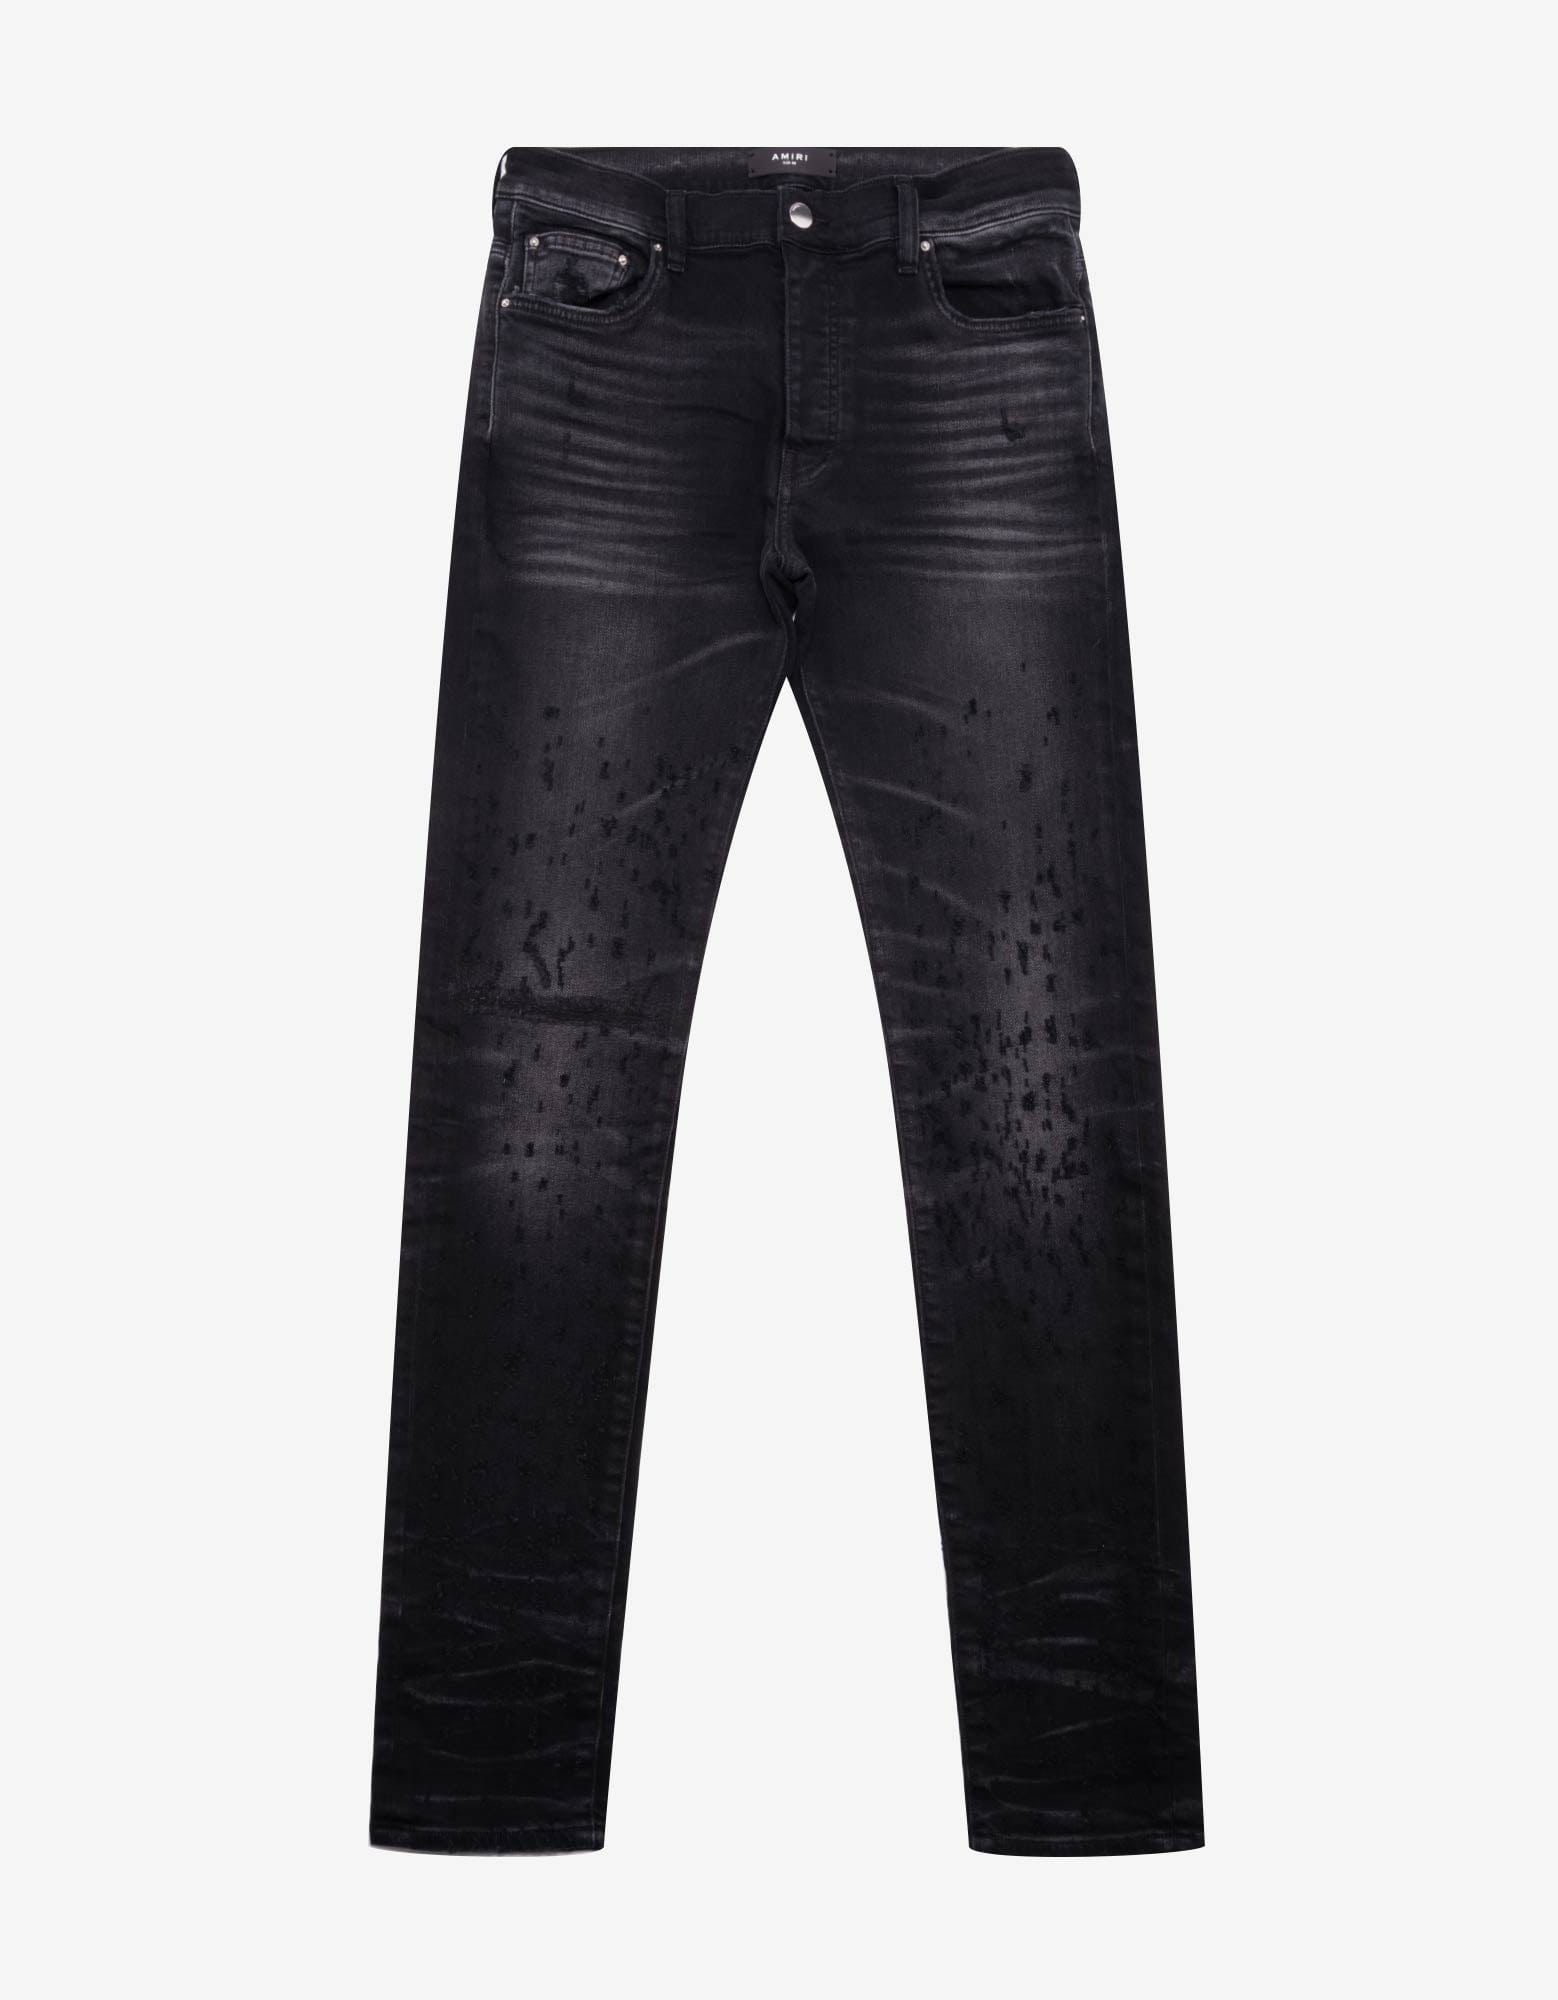 Black Shotgun Skinny Jeans - 1